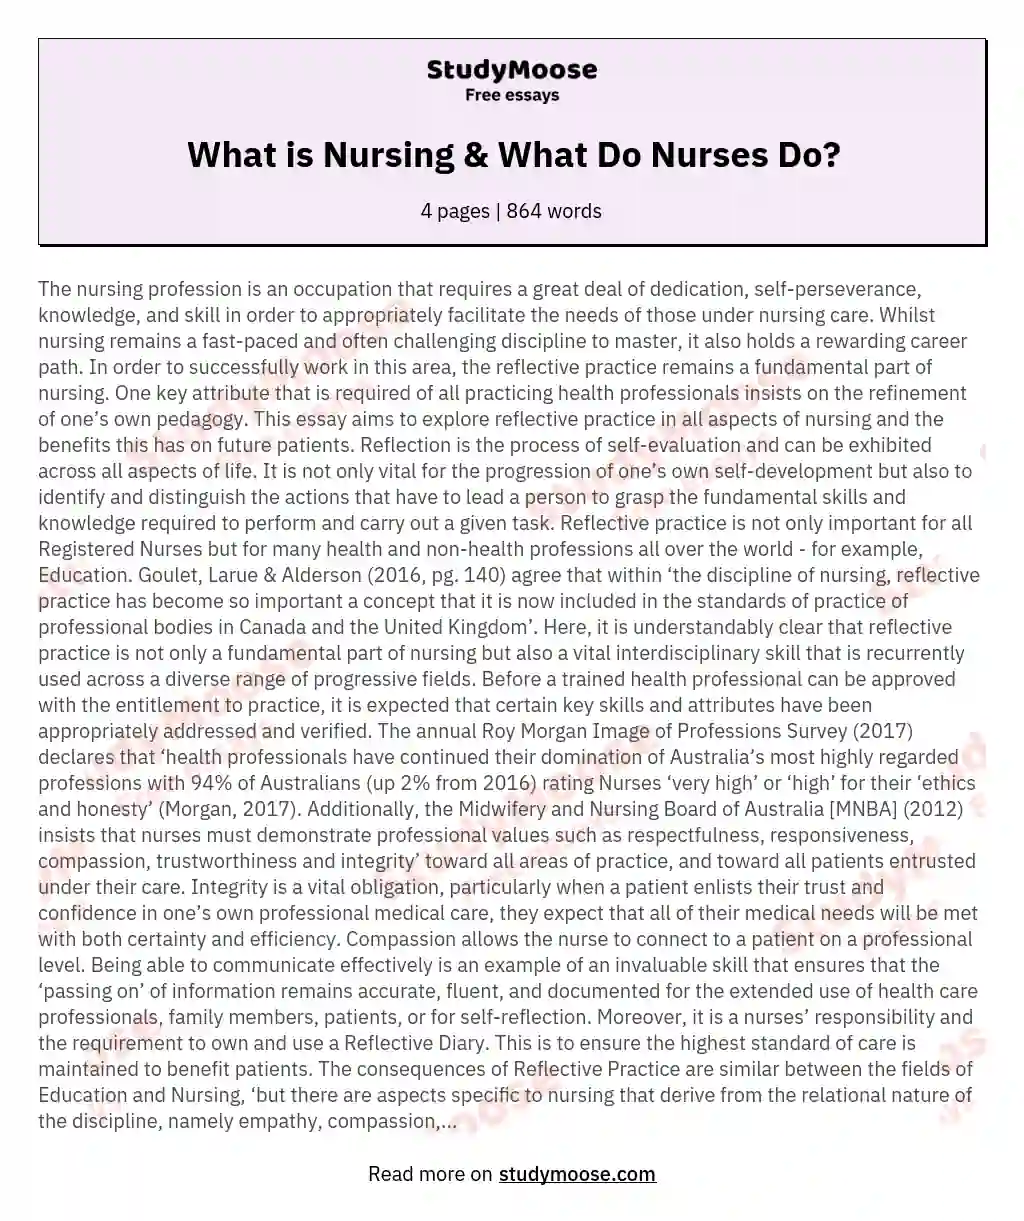 What is Nursing & What Do Nurses Do? essay